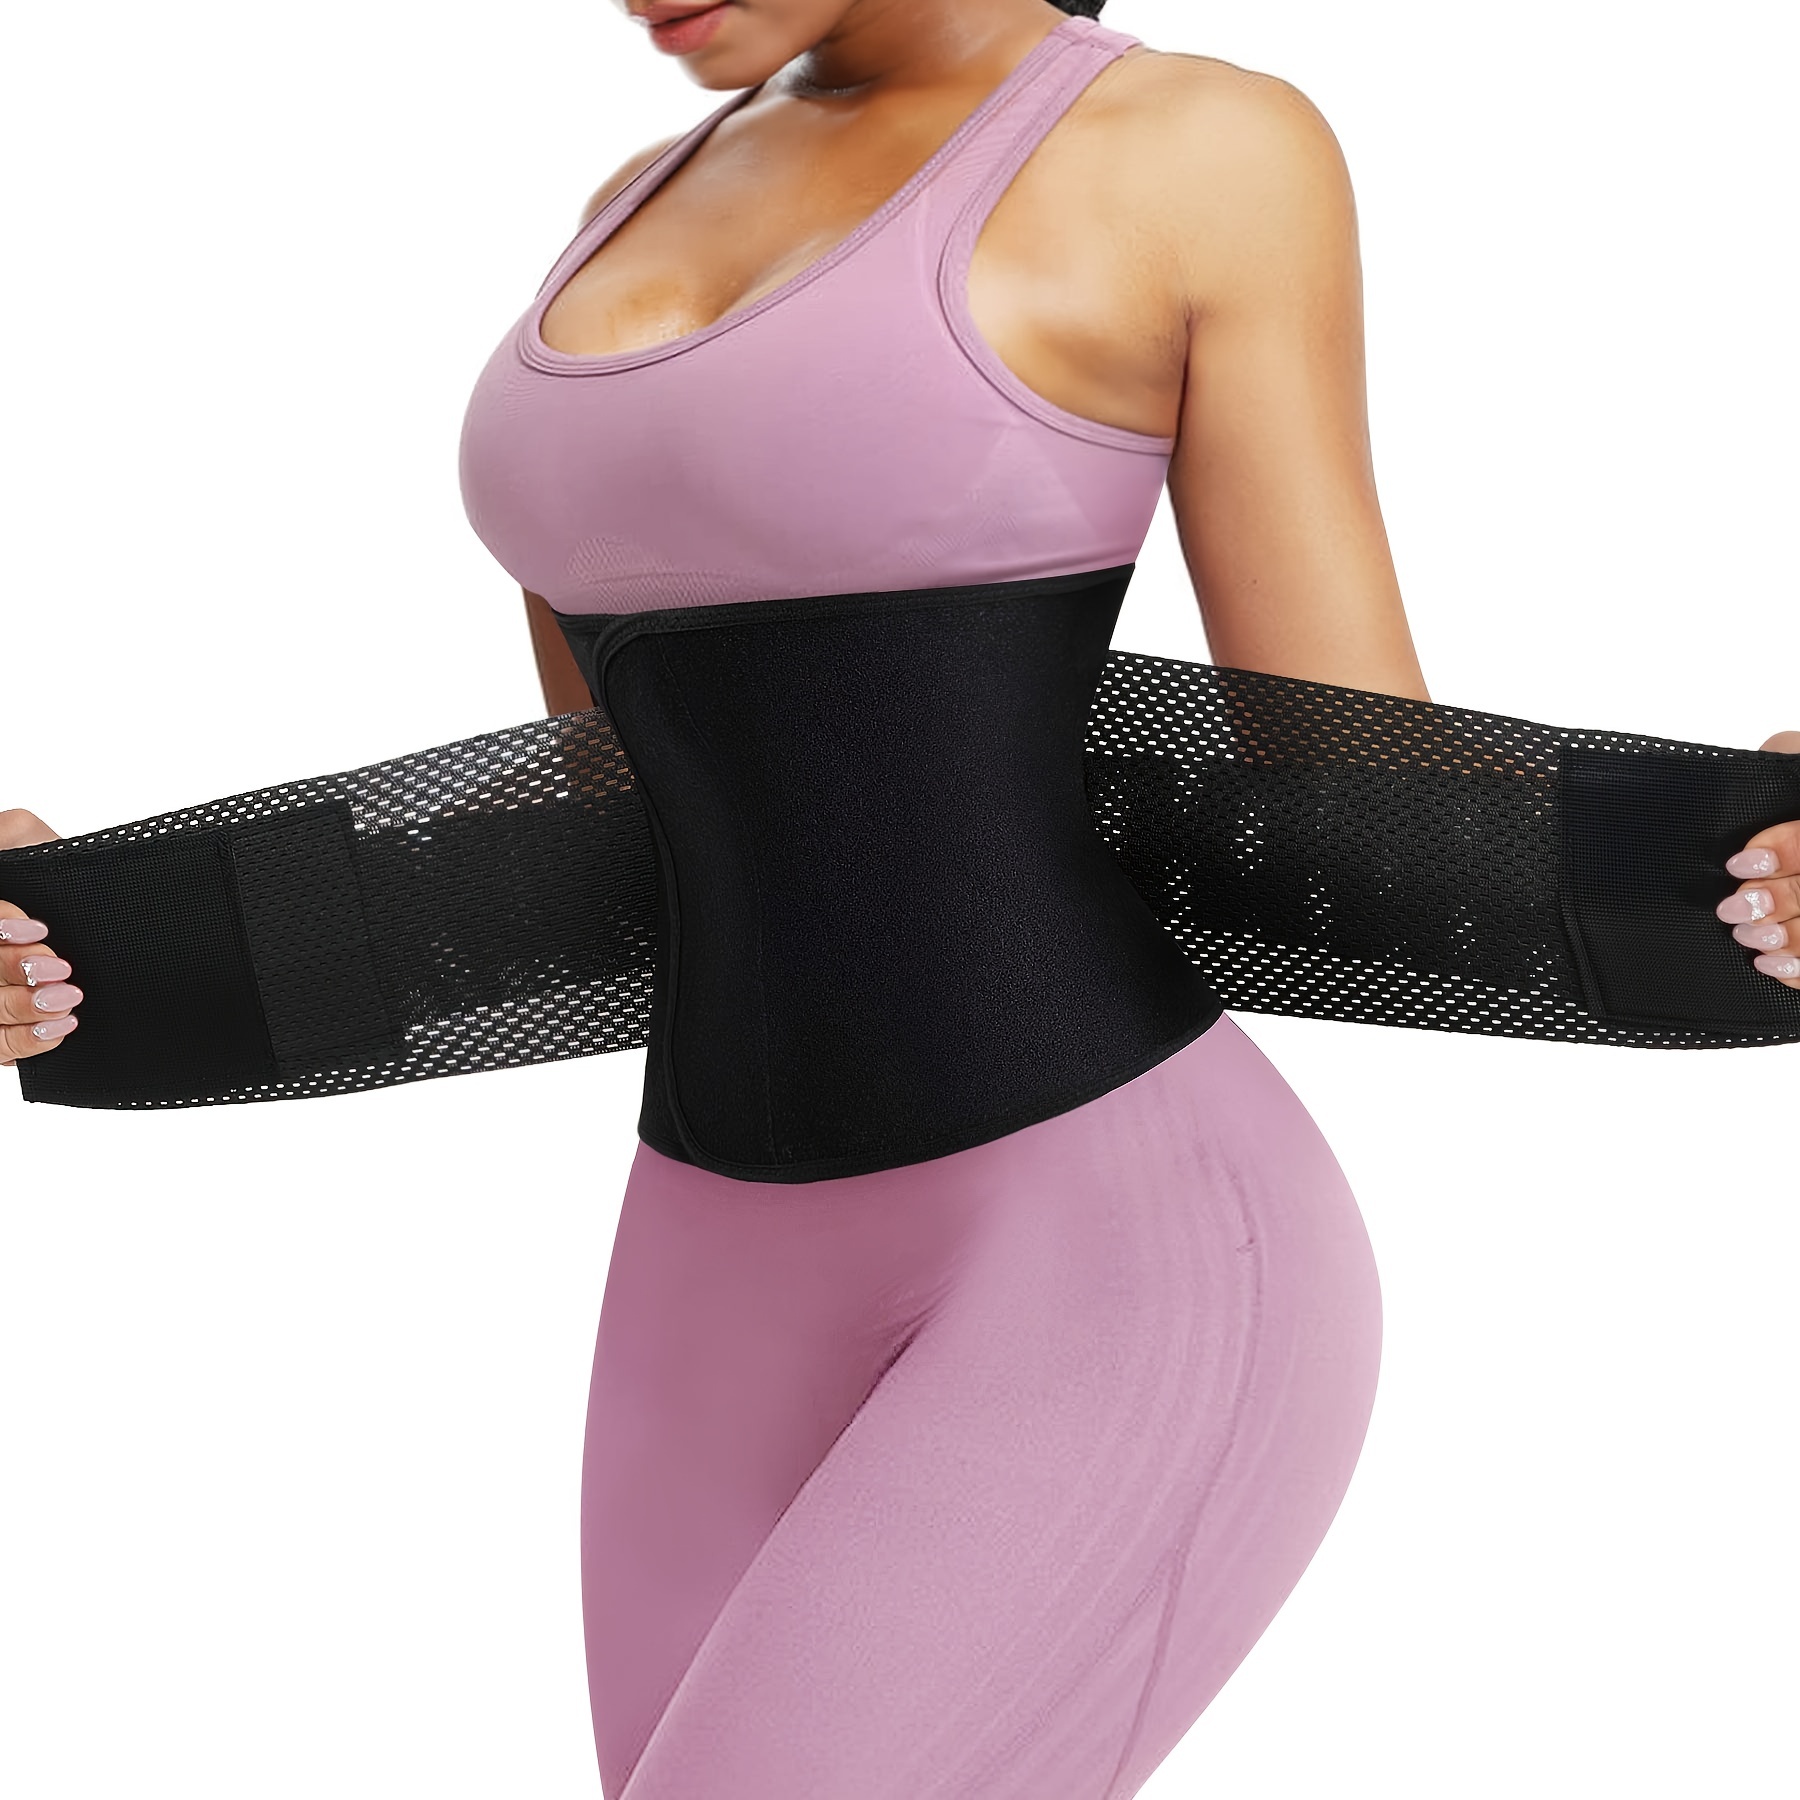 MERMAID'S MYSTERY Waist Trimmer Trainer Belt Women Men Neoprene Sport Sweat  Workout Slimming Body Shaper Sauna Exercise Black, Waist Trimmers -   Canada